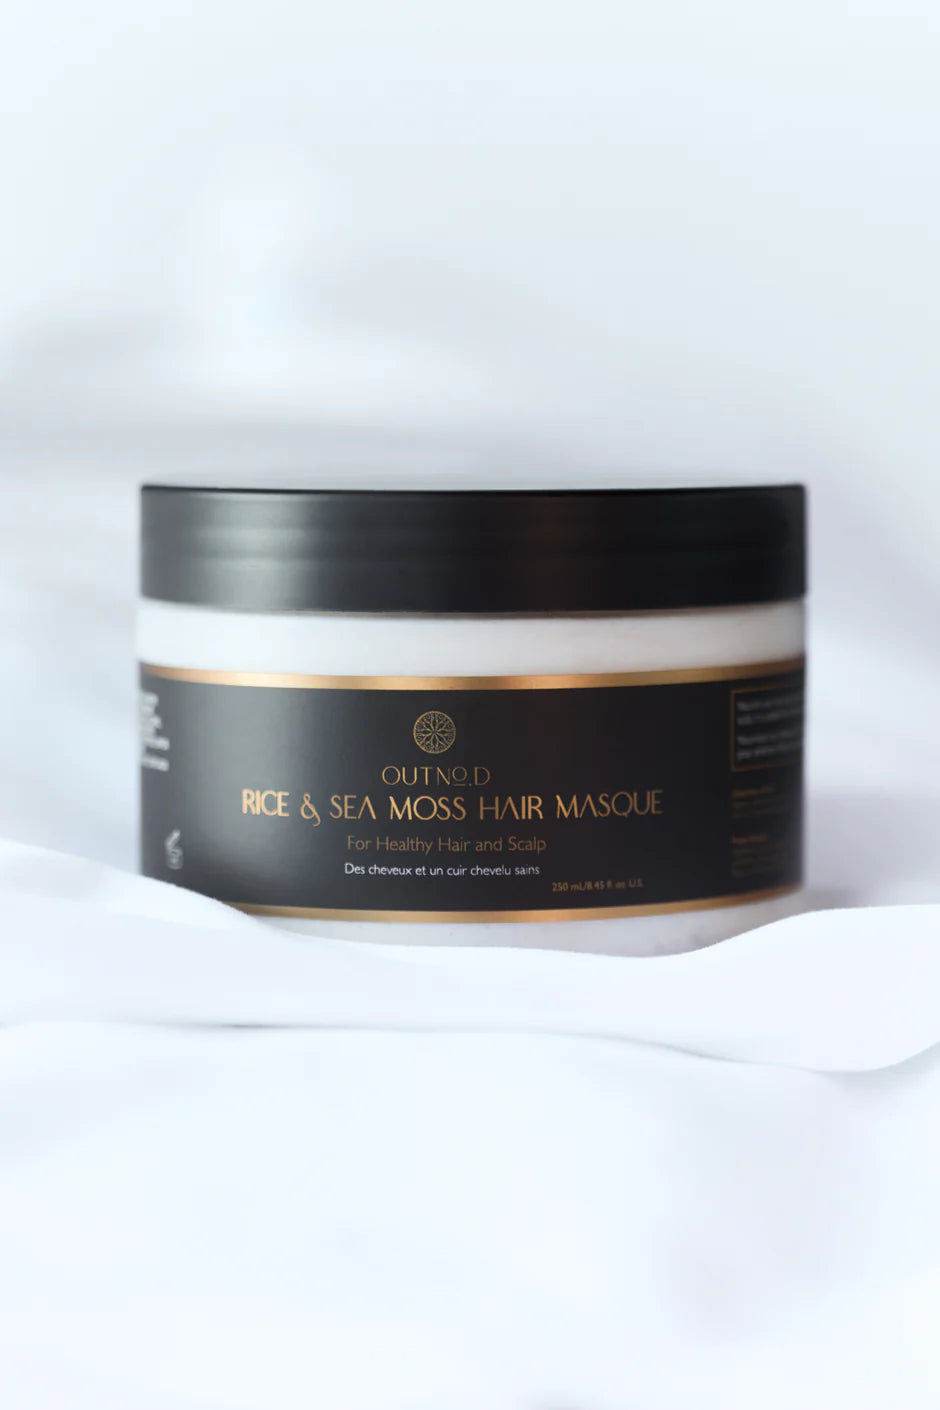 OutNo.d Rice & Sea Moss Hair Masque